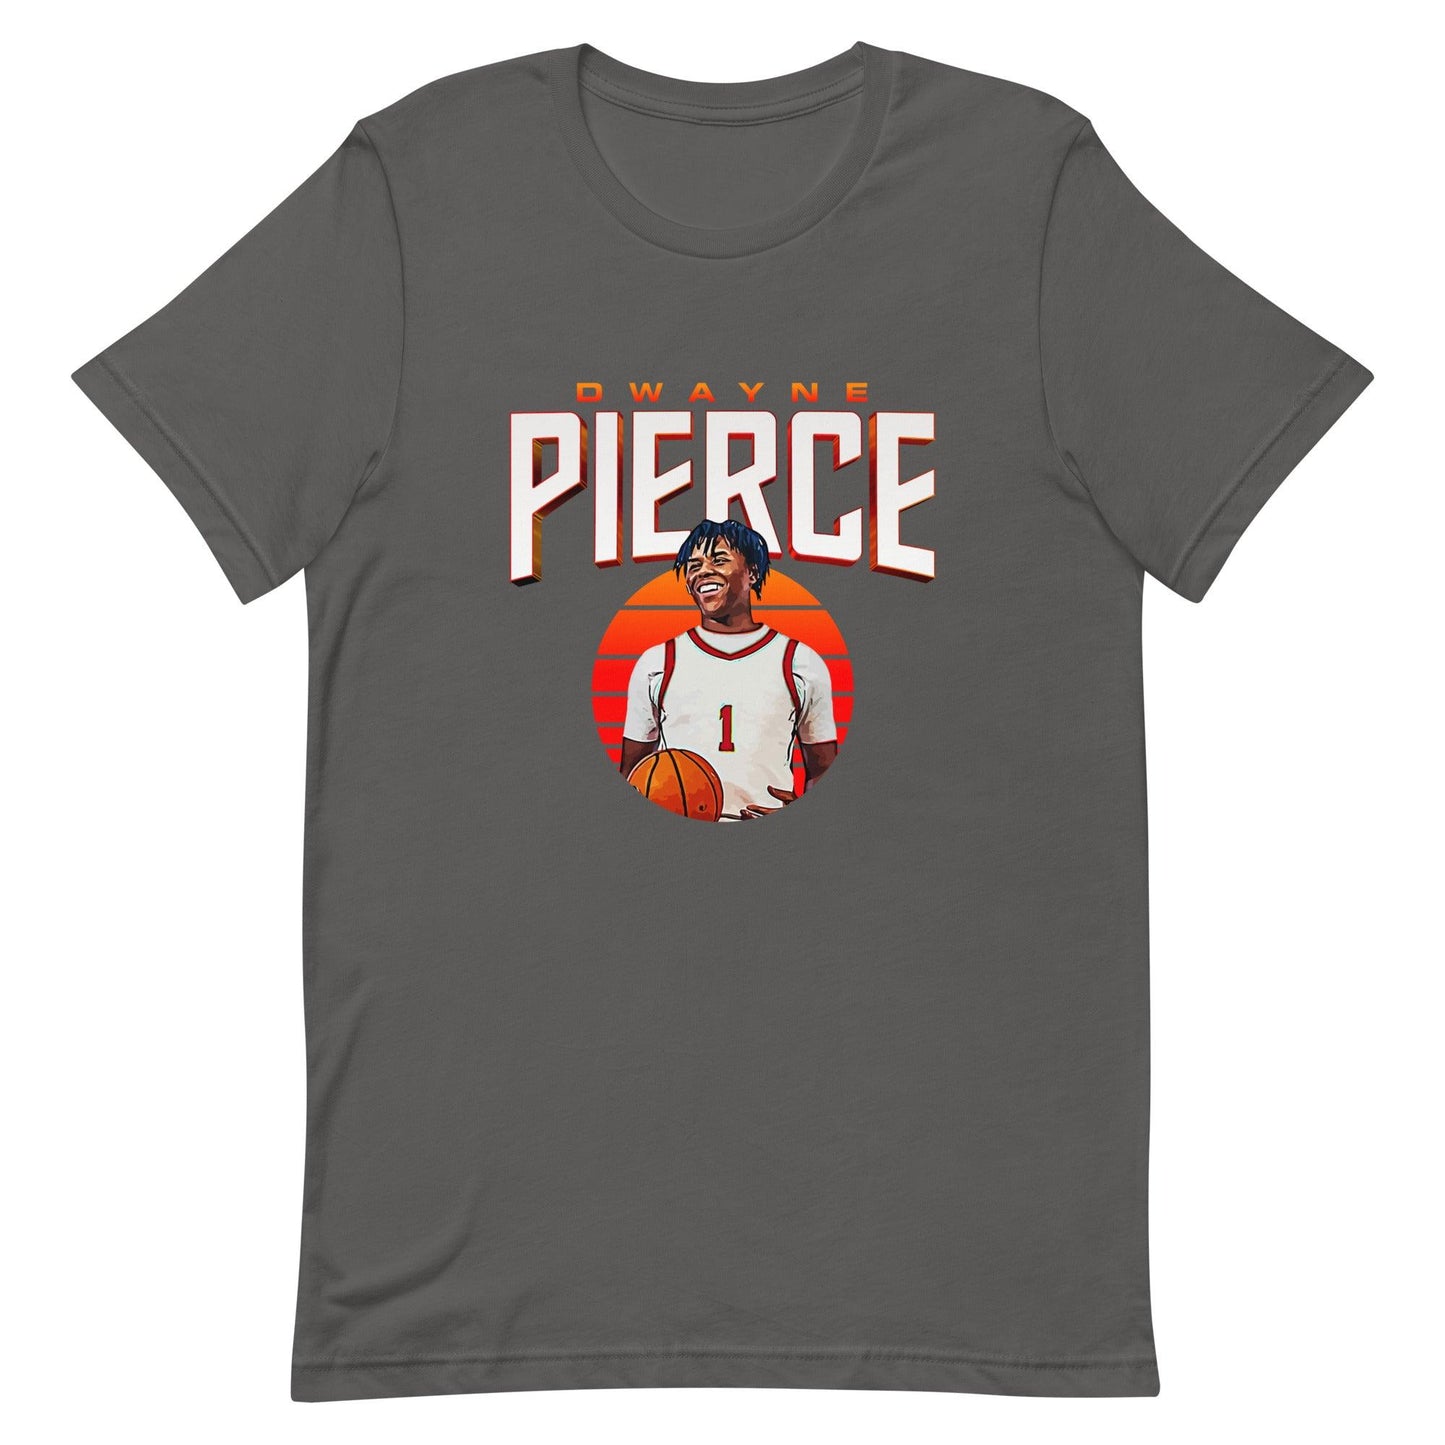 Dwayne Pierce "Gameday" t-shirt - Fan Arch